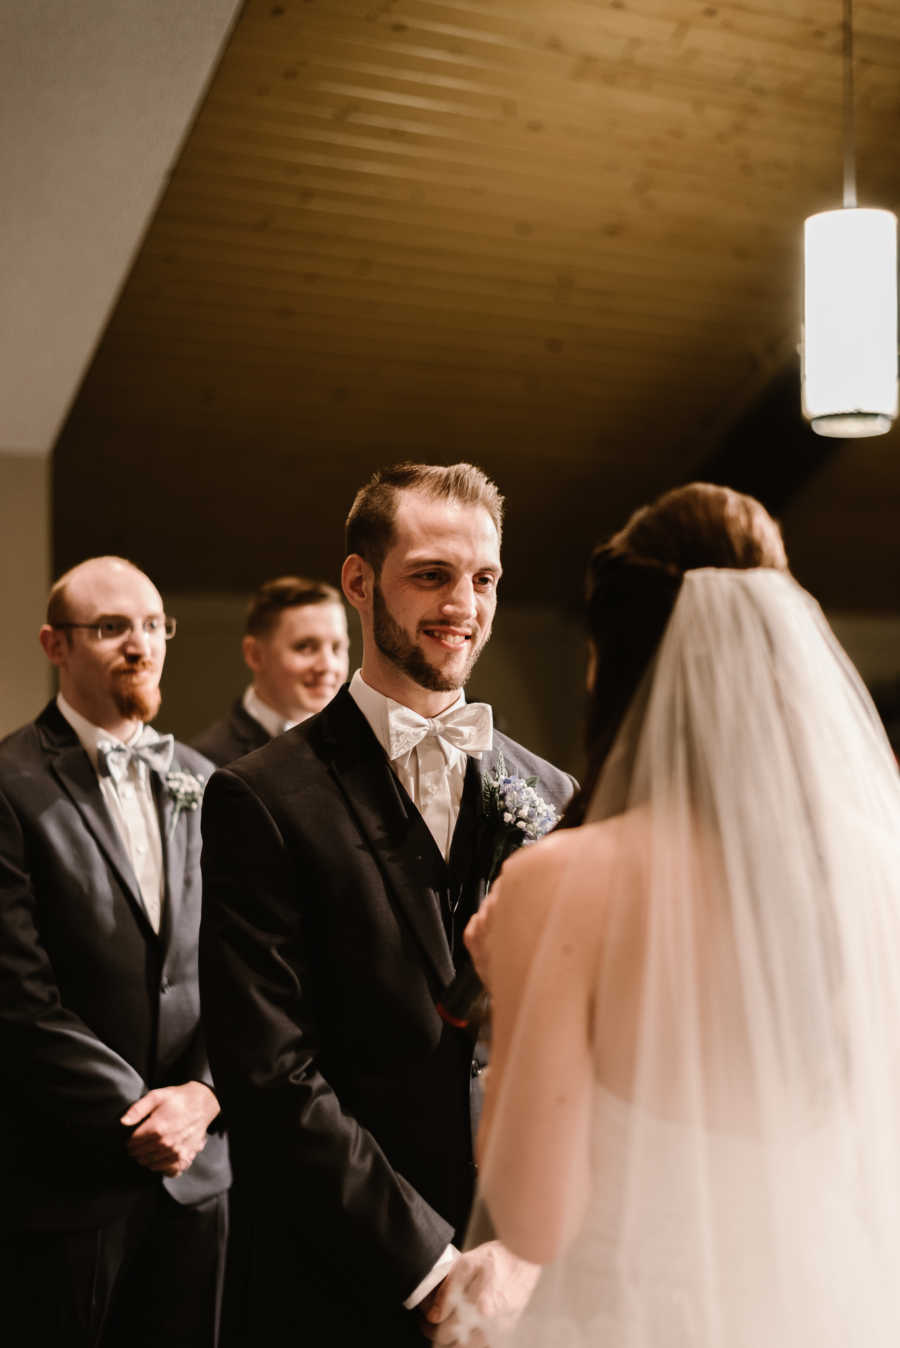 Groom stands smiling at bride at altar